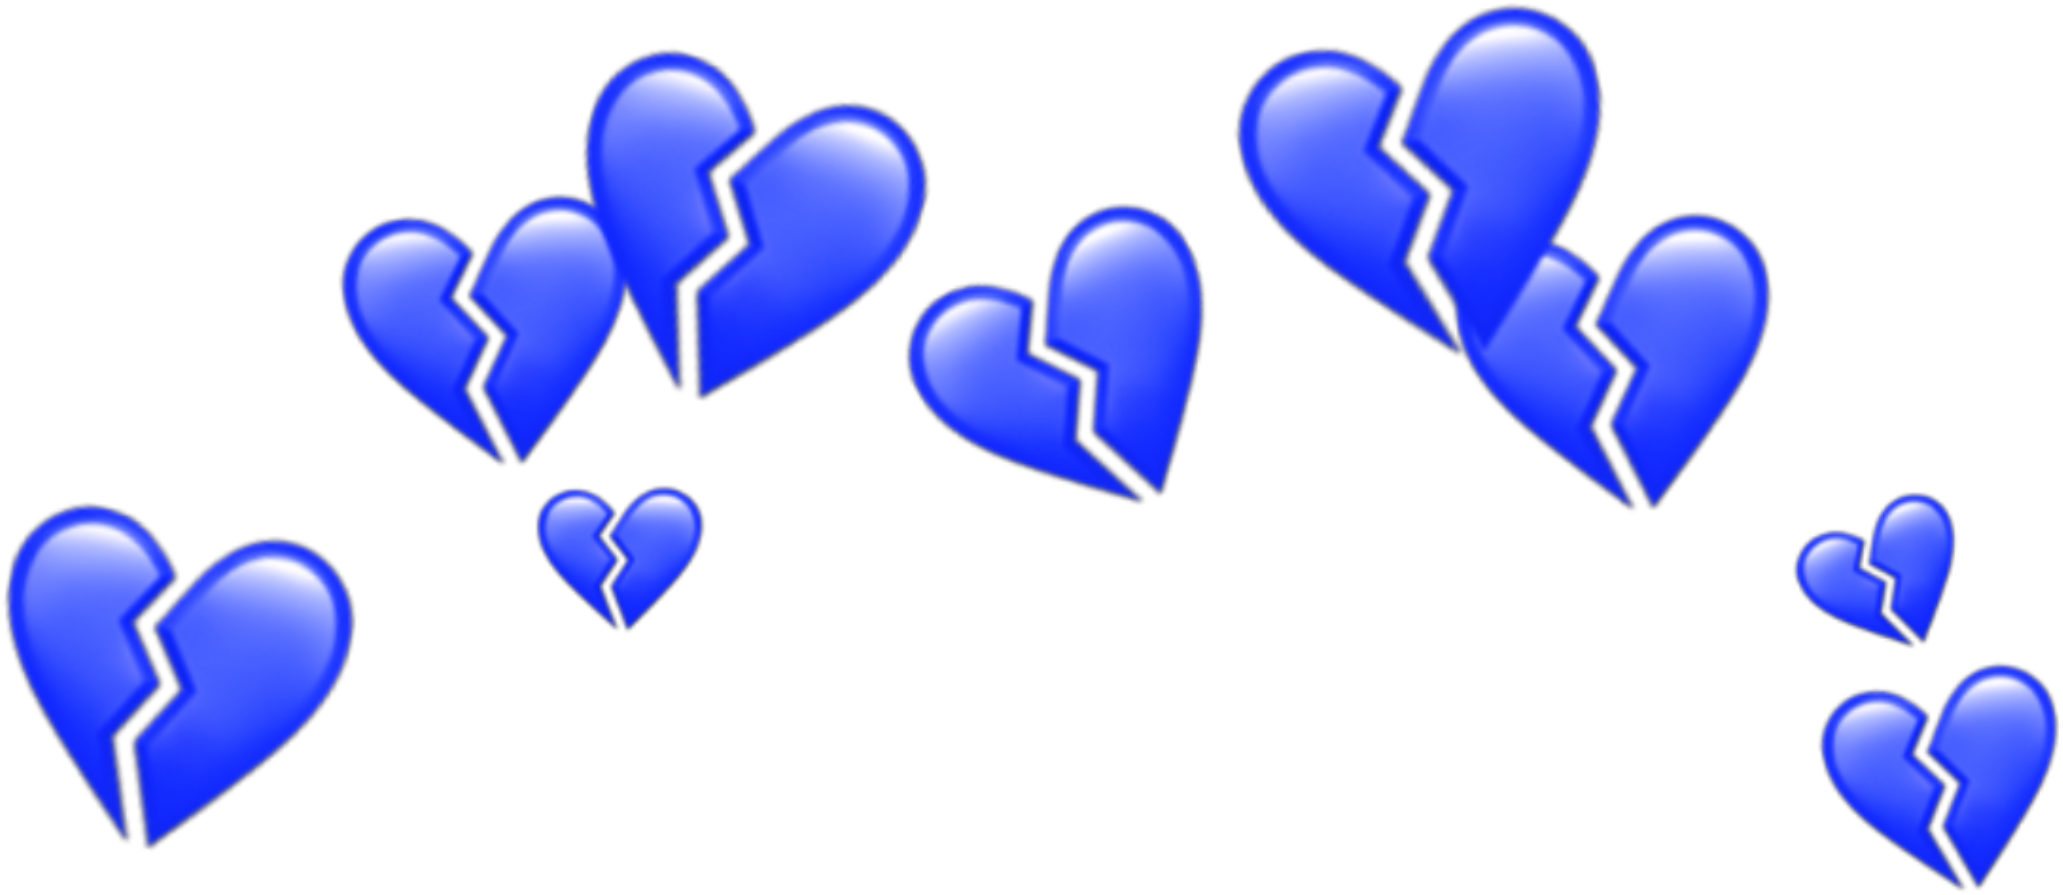 Синее сердечко. Голубое сердечко. Синие сердечки на прозрачном фоне. Синие сердечки над головой.